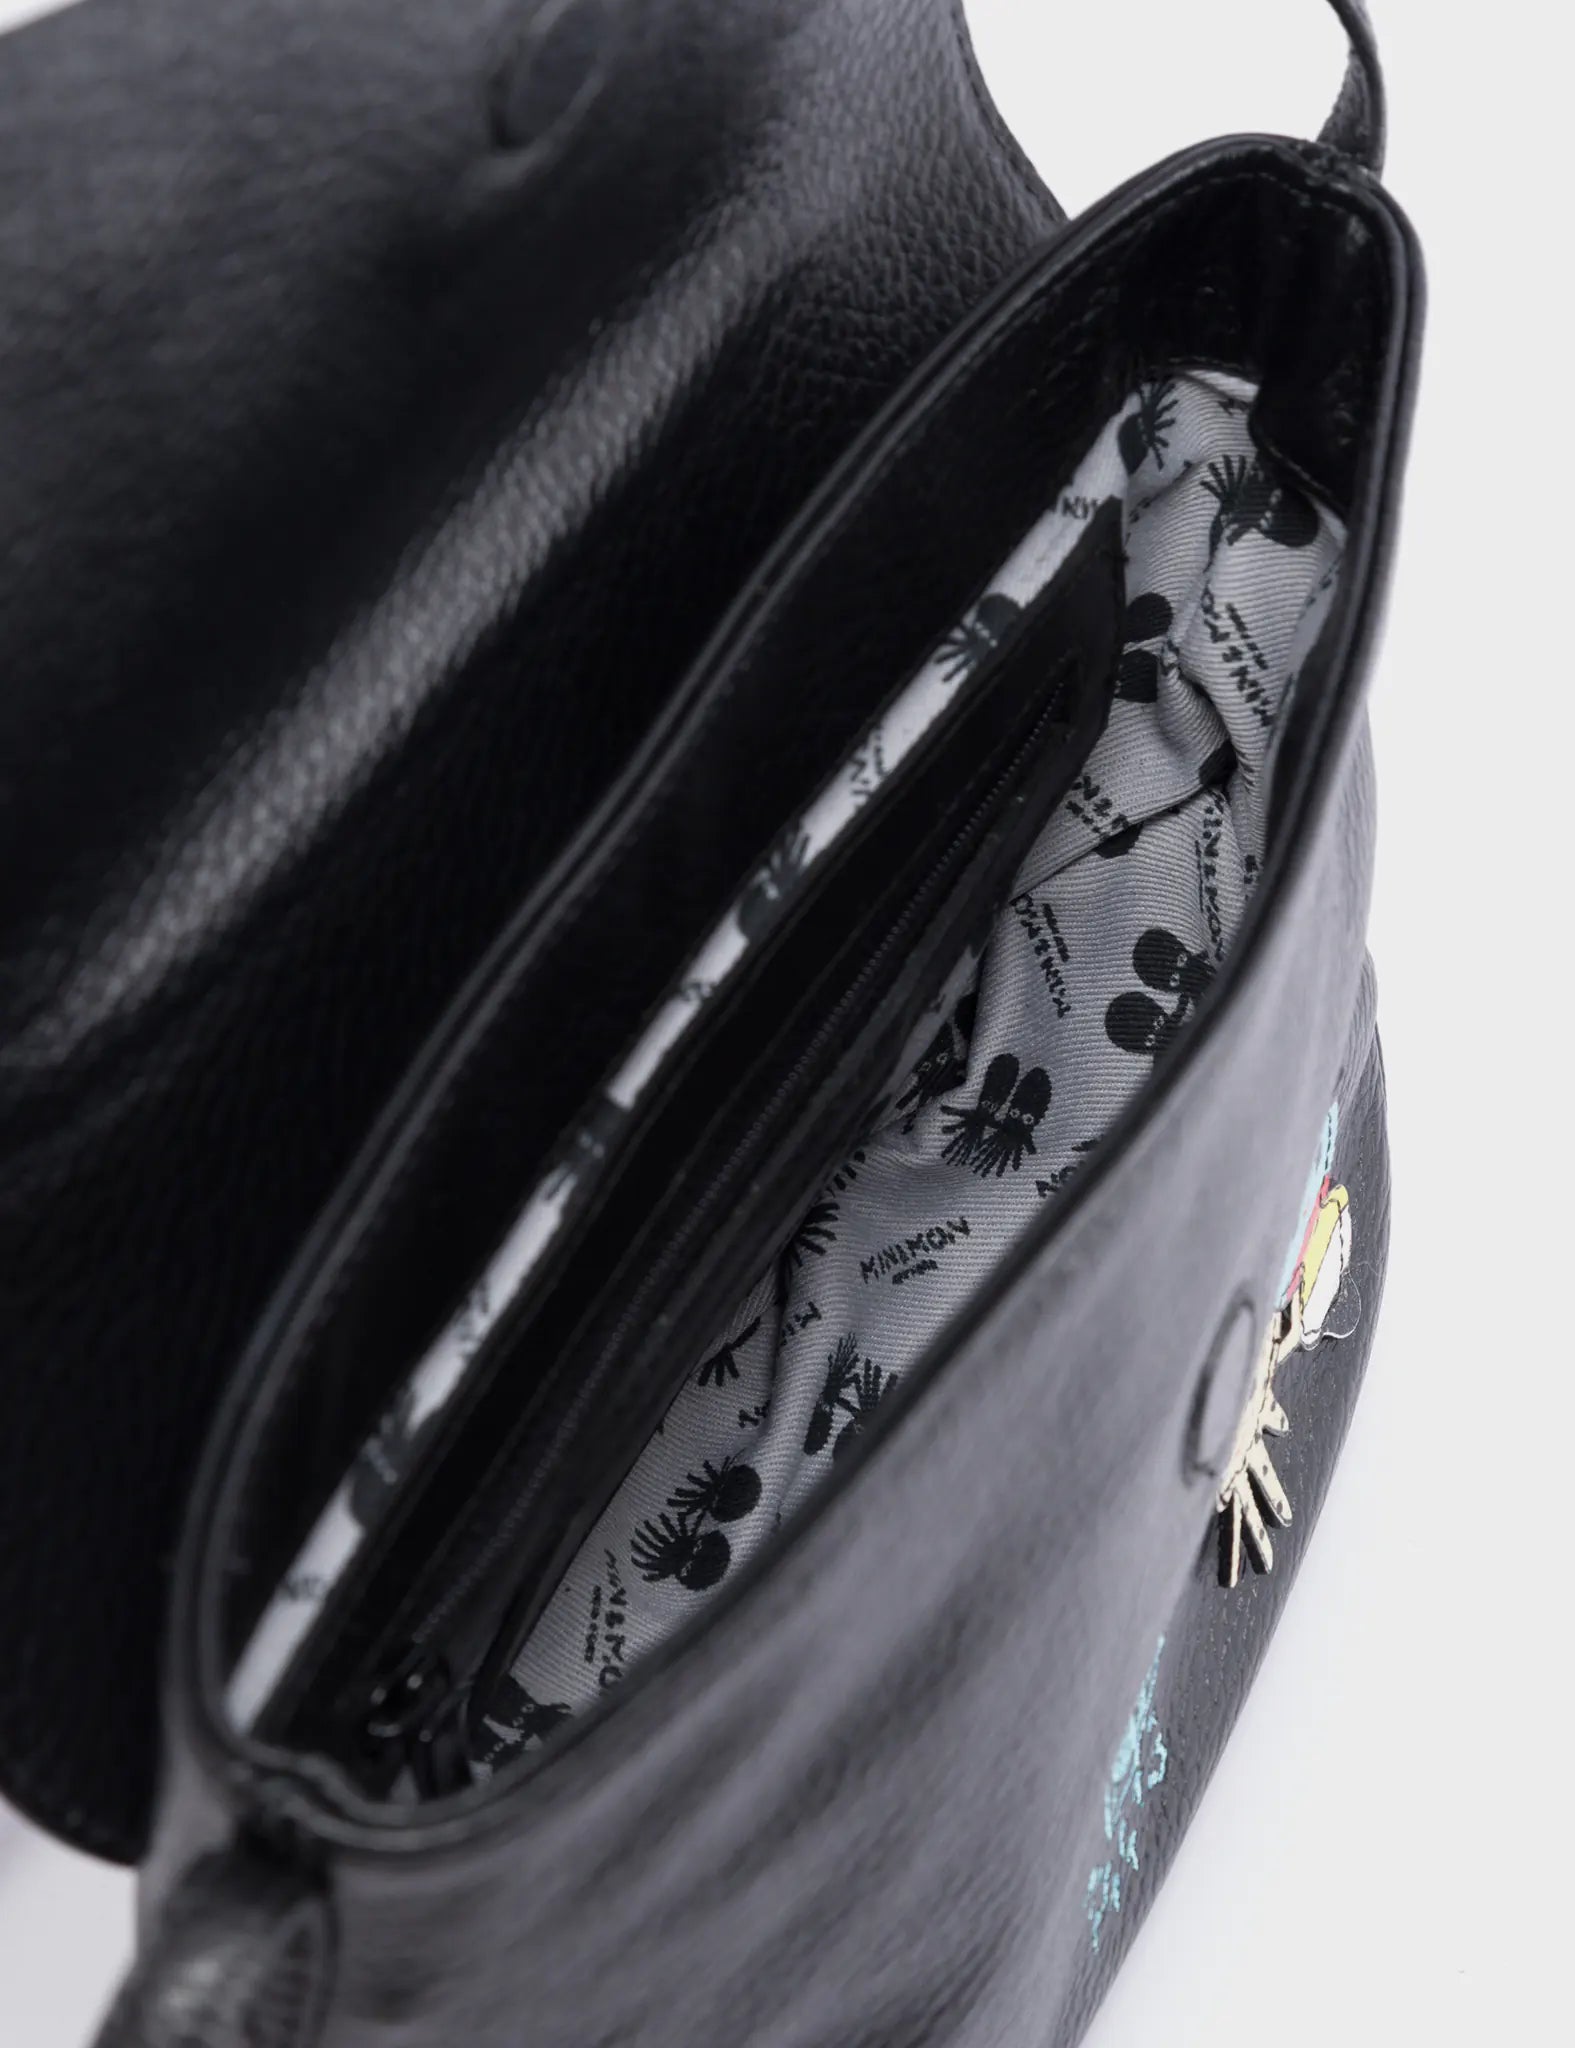 Bruno Mini Crossbody Black Leather Bag - Graffiti Figures Applique - Detail View